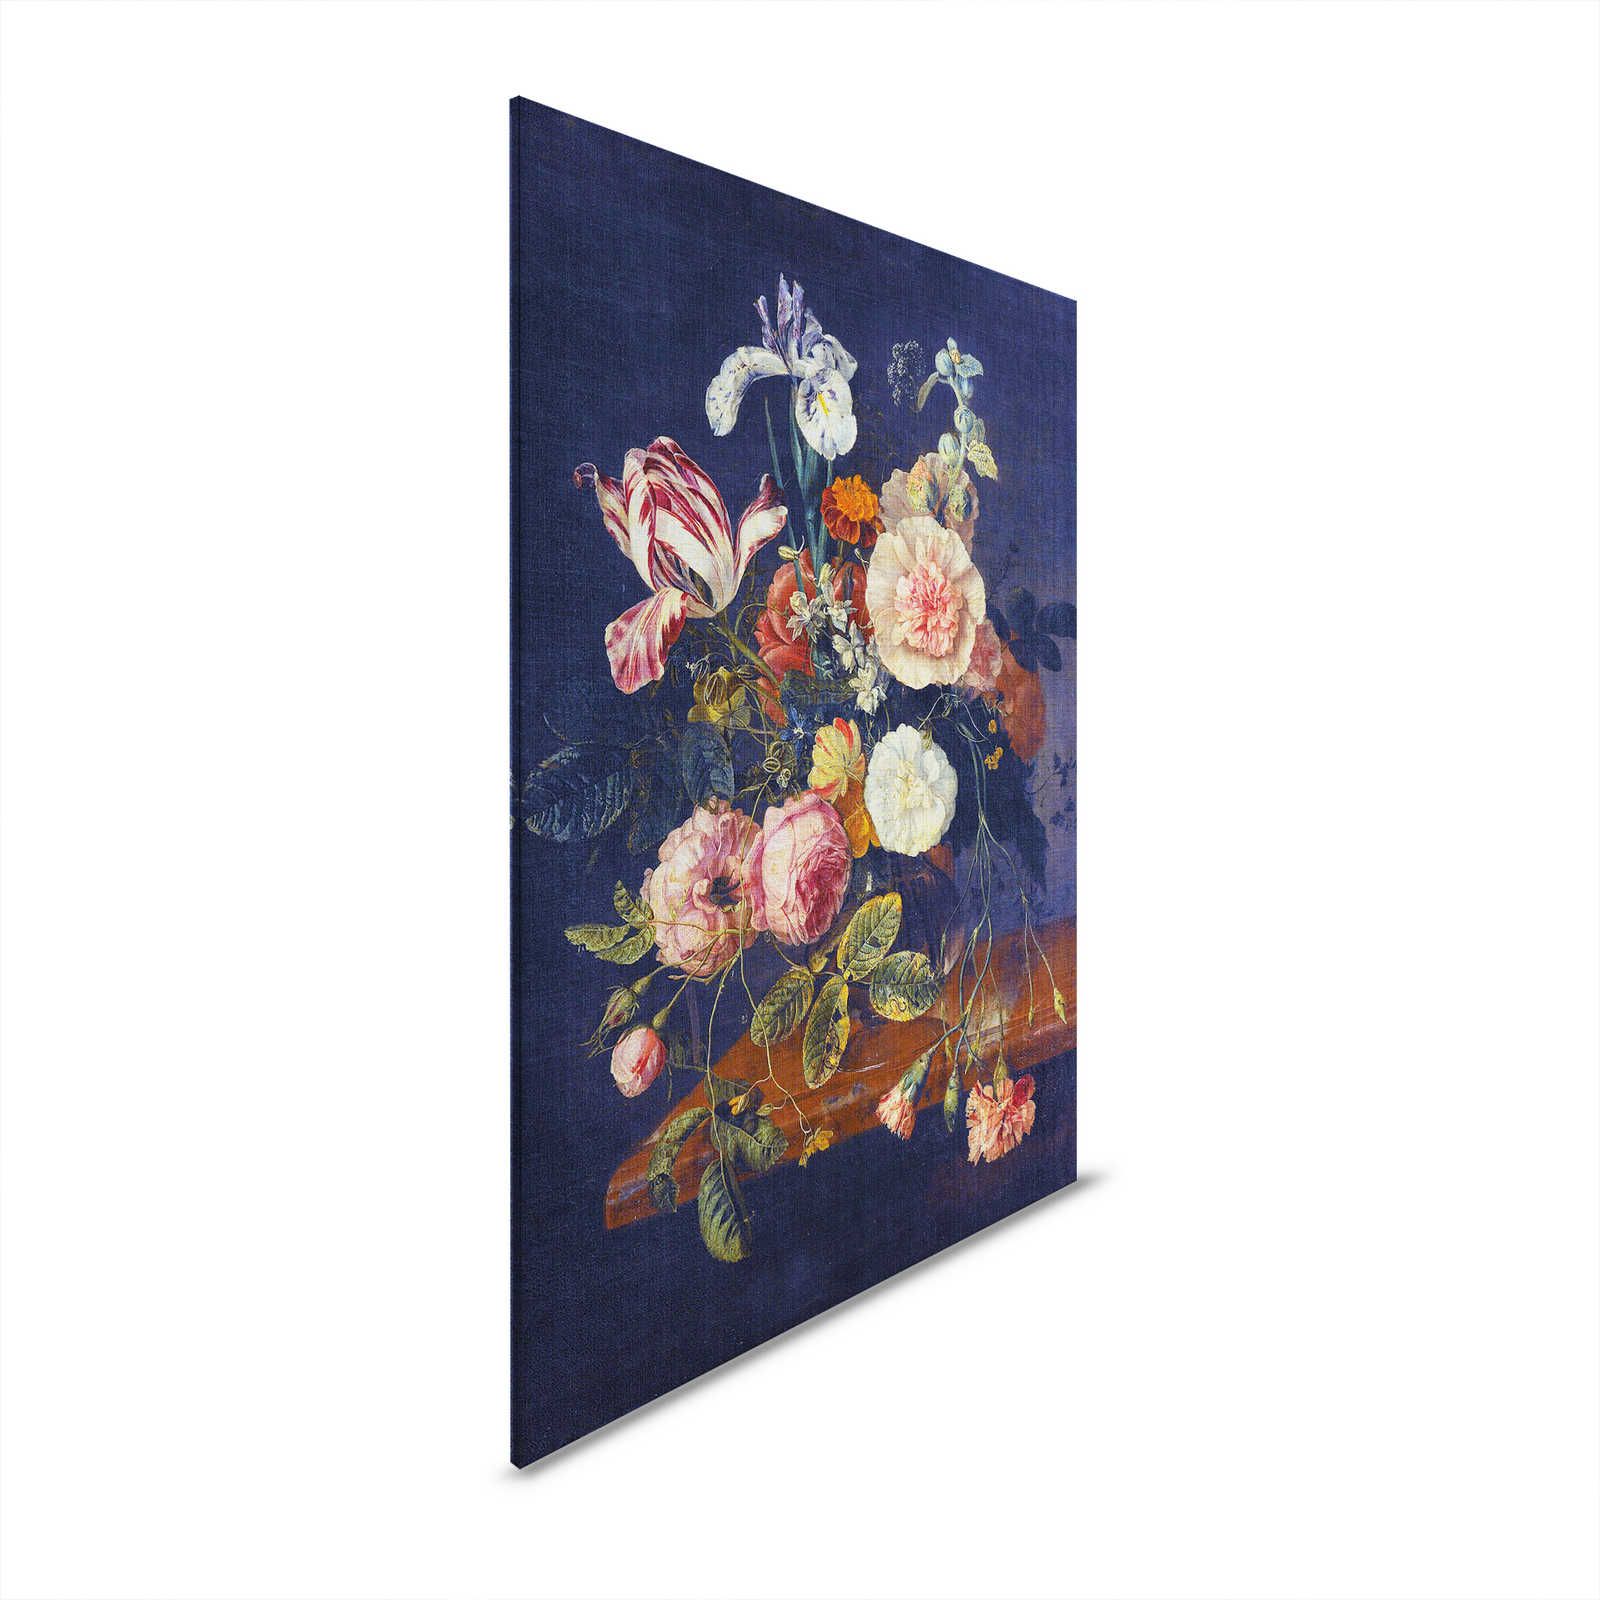 Artists Studio 1 - Canvas painting Flowers Still Life Dark Blue - 0,80 m x 1,20 m
